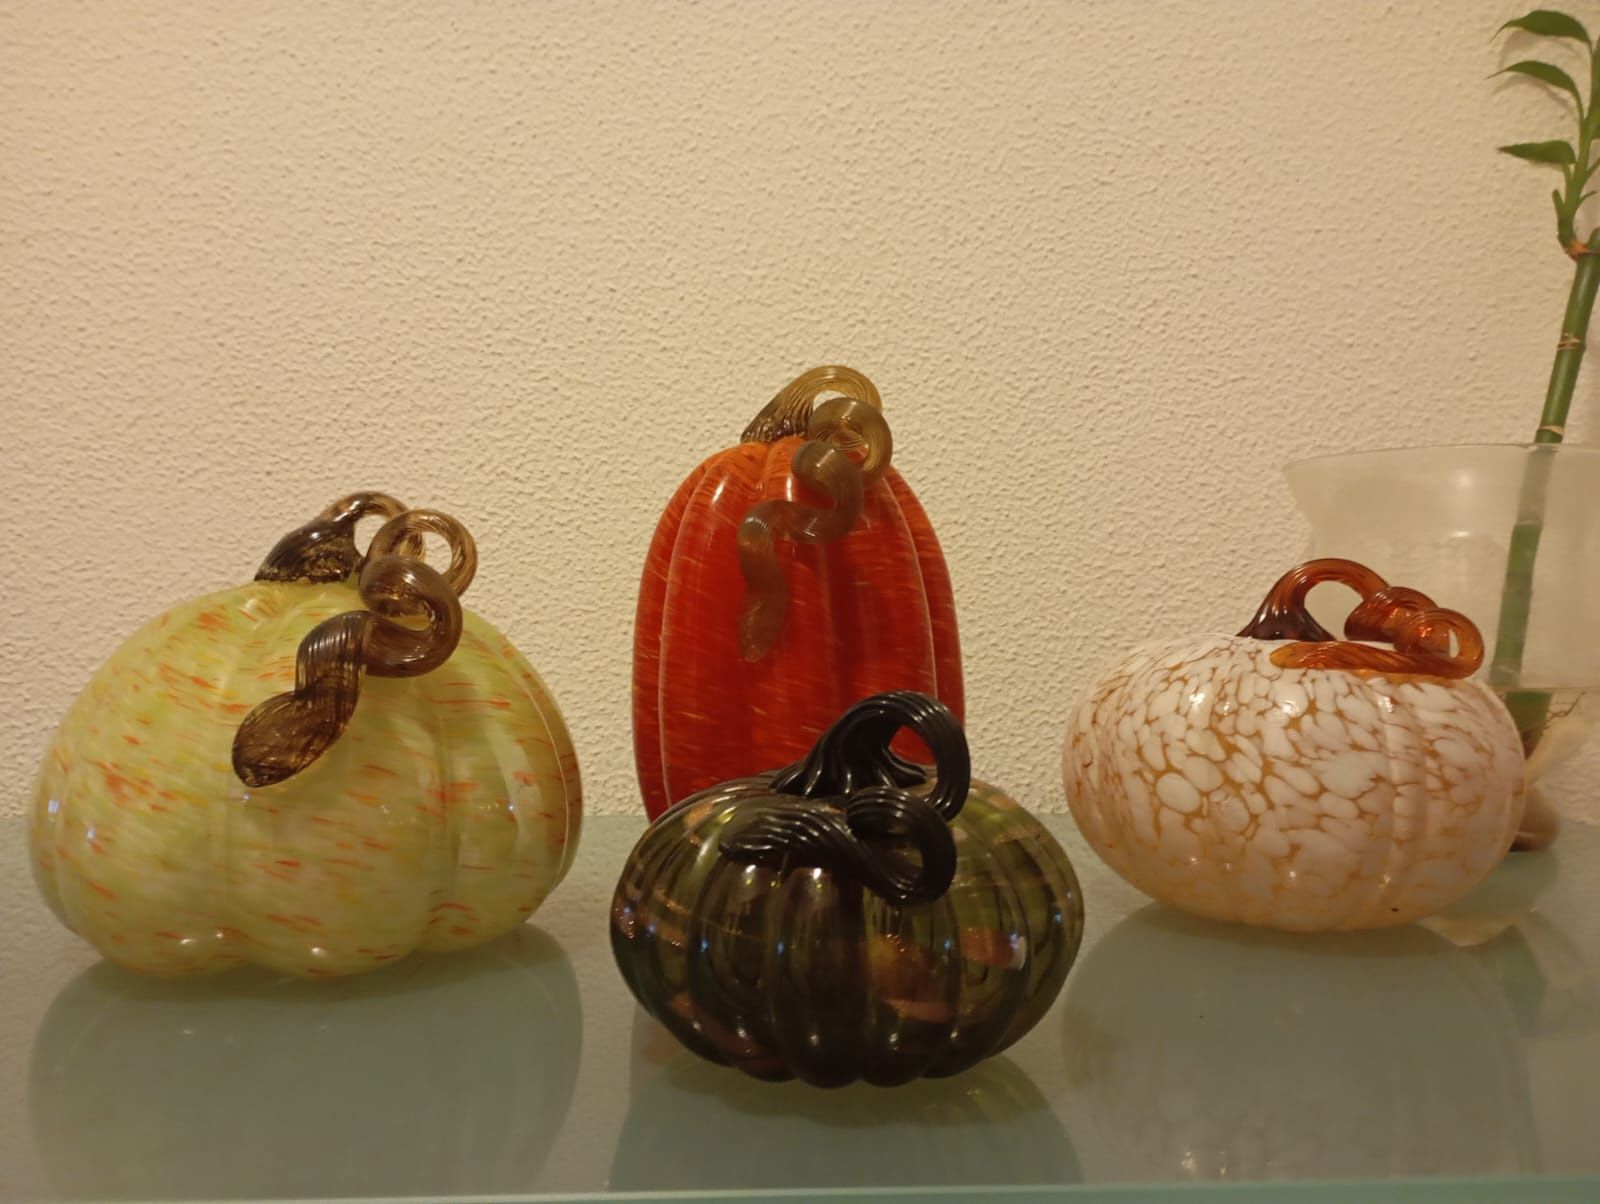 Loiça decorativa em formato de abóboras